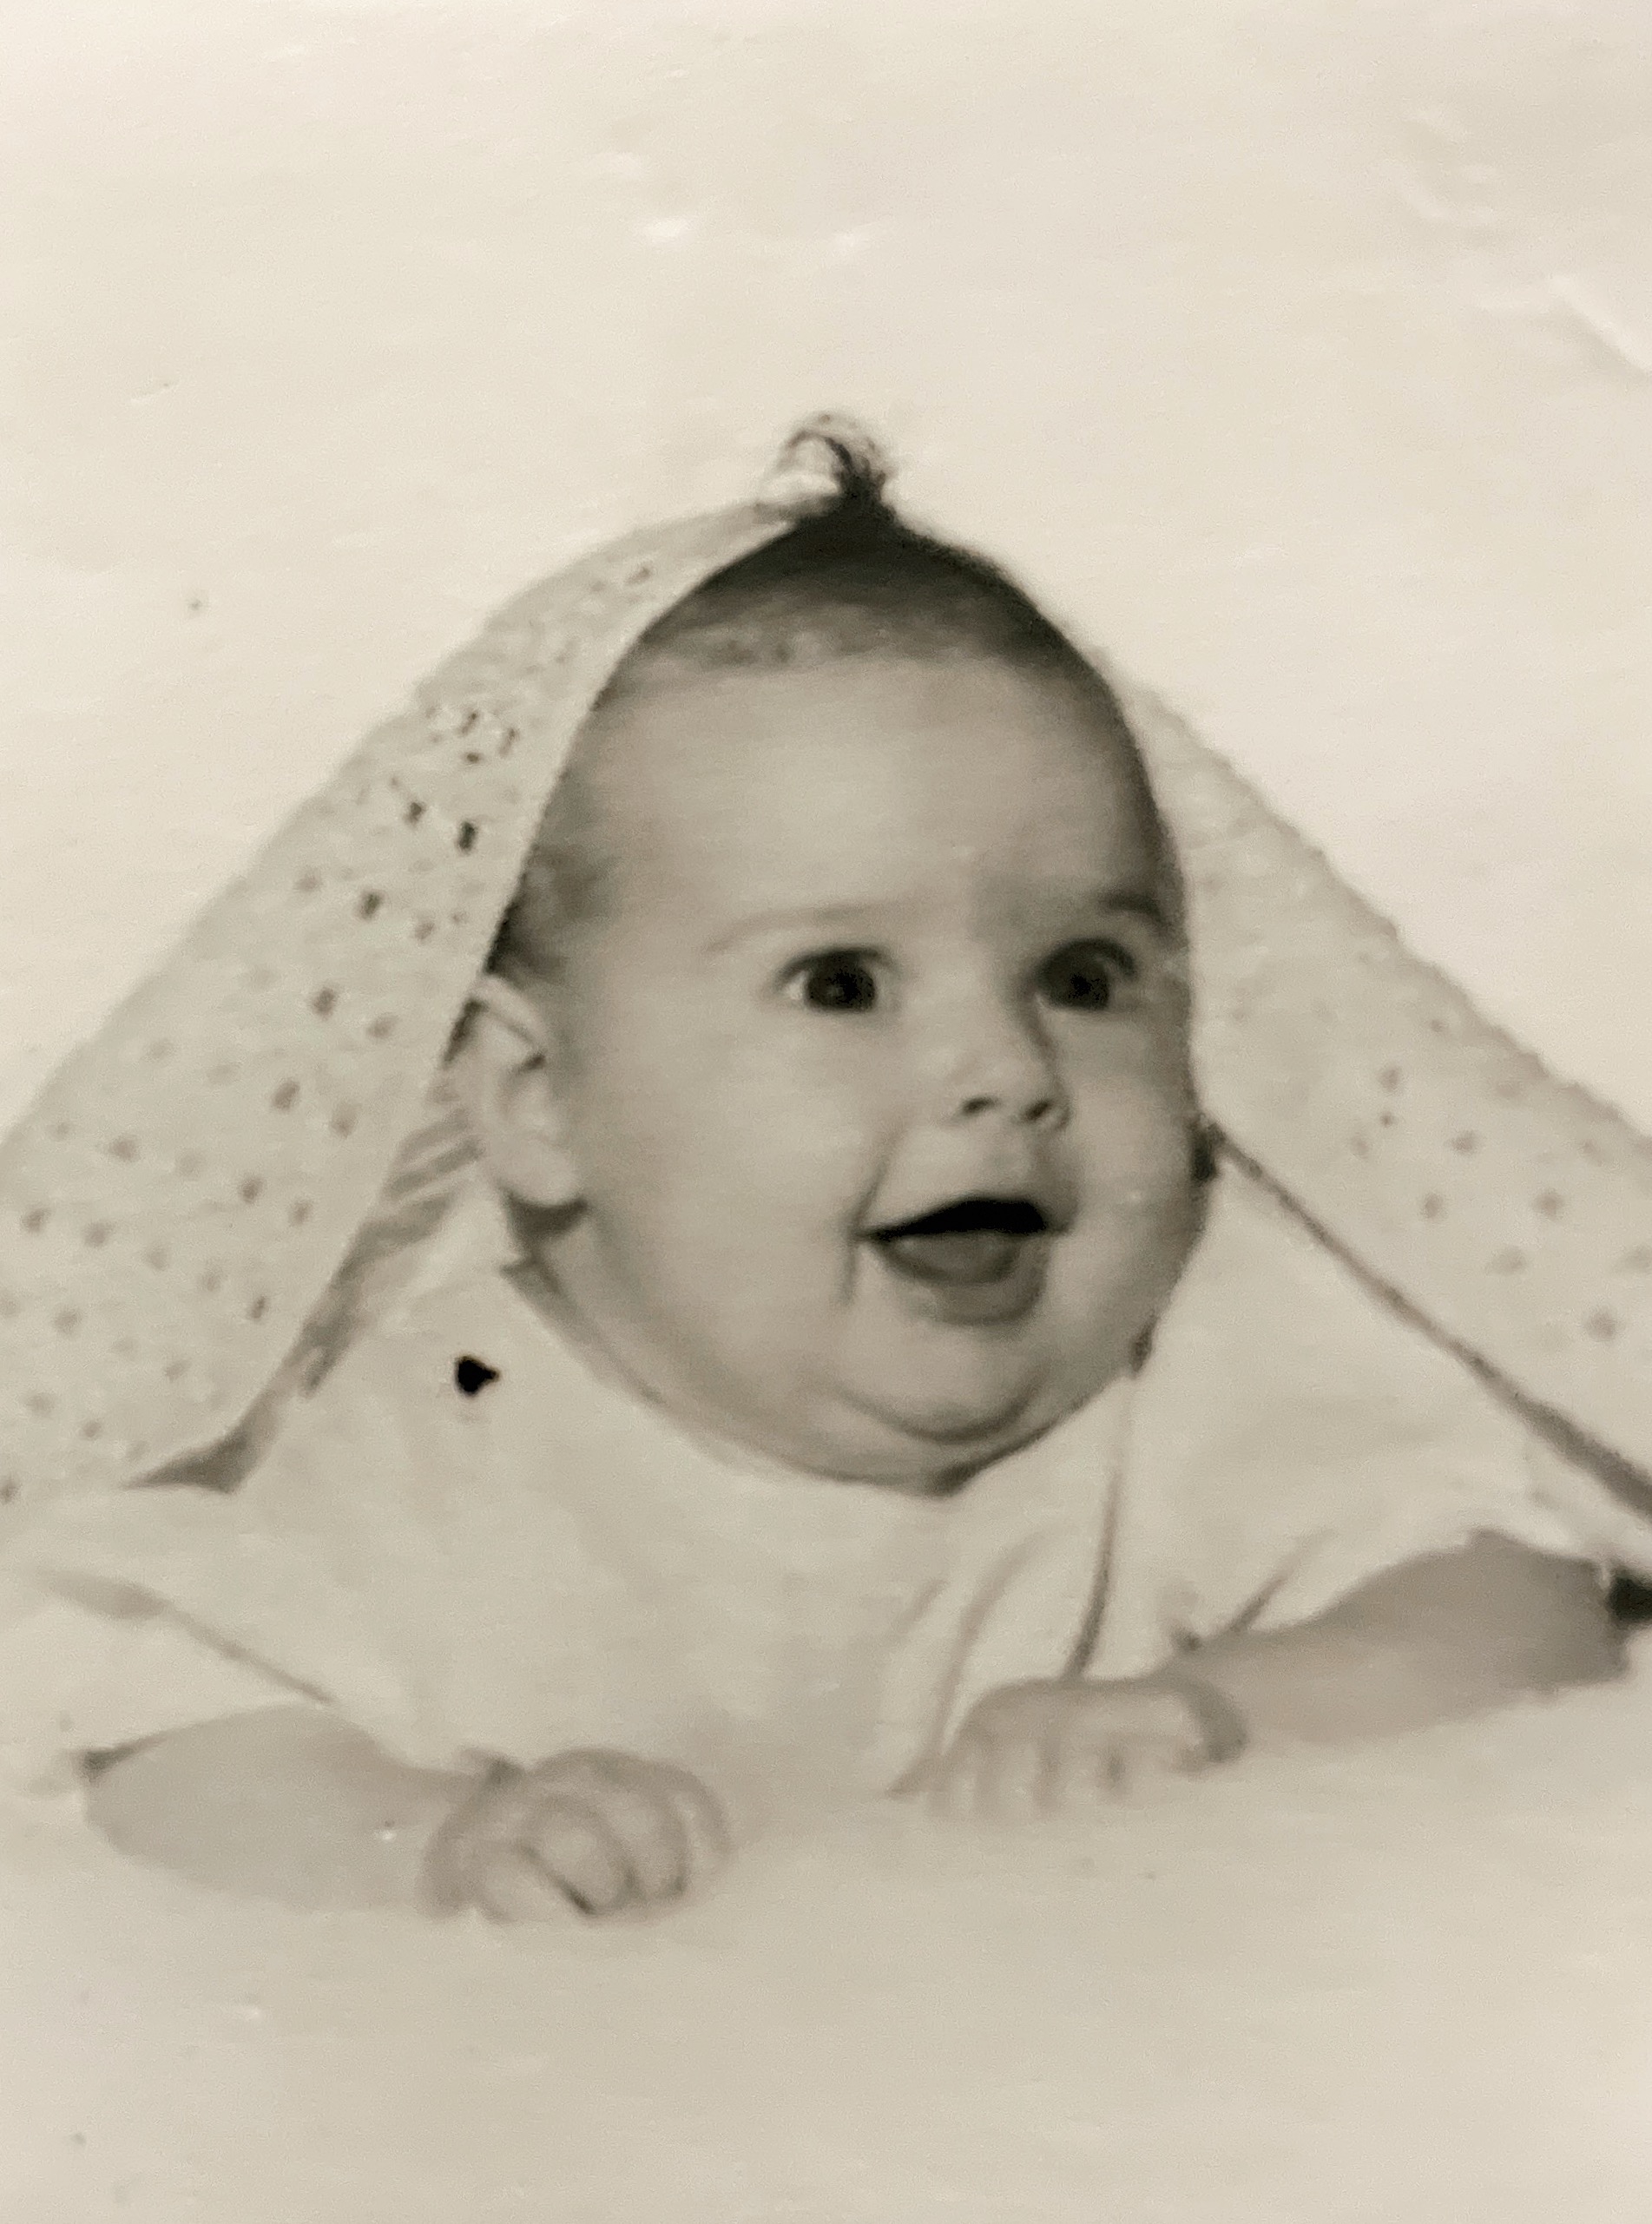 Gyalia Marie Coule 3 months old. Nov 1966